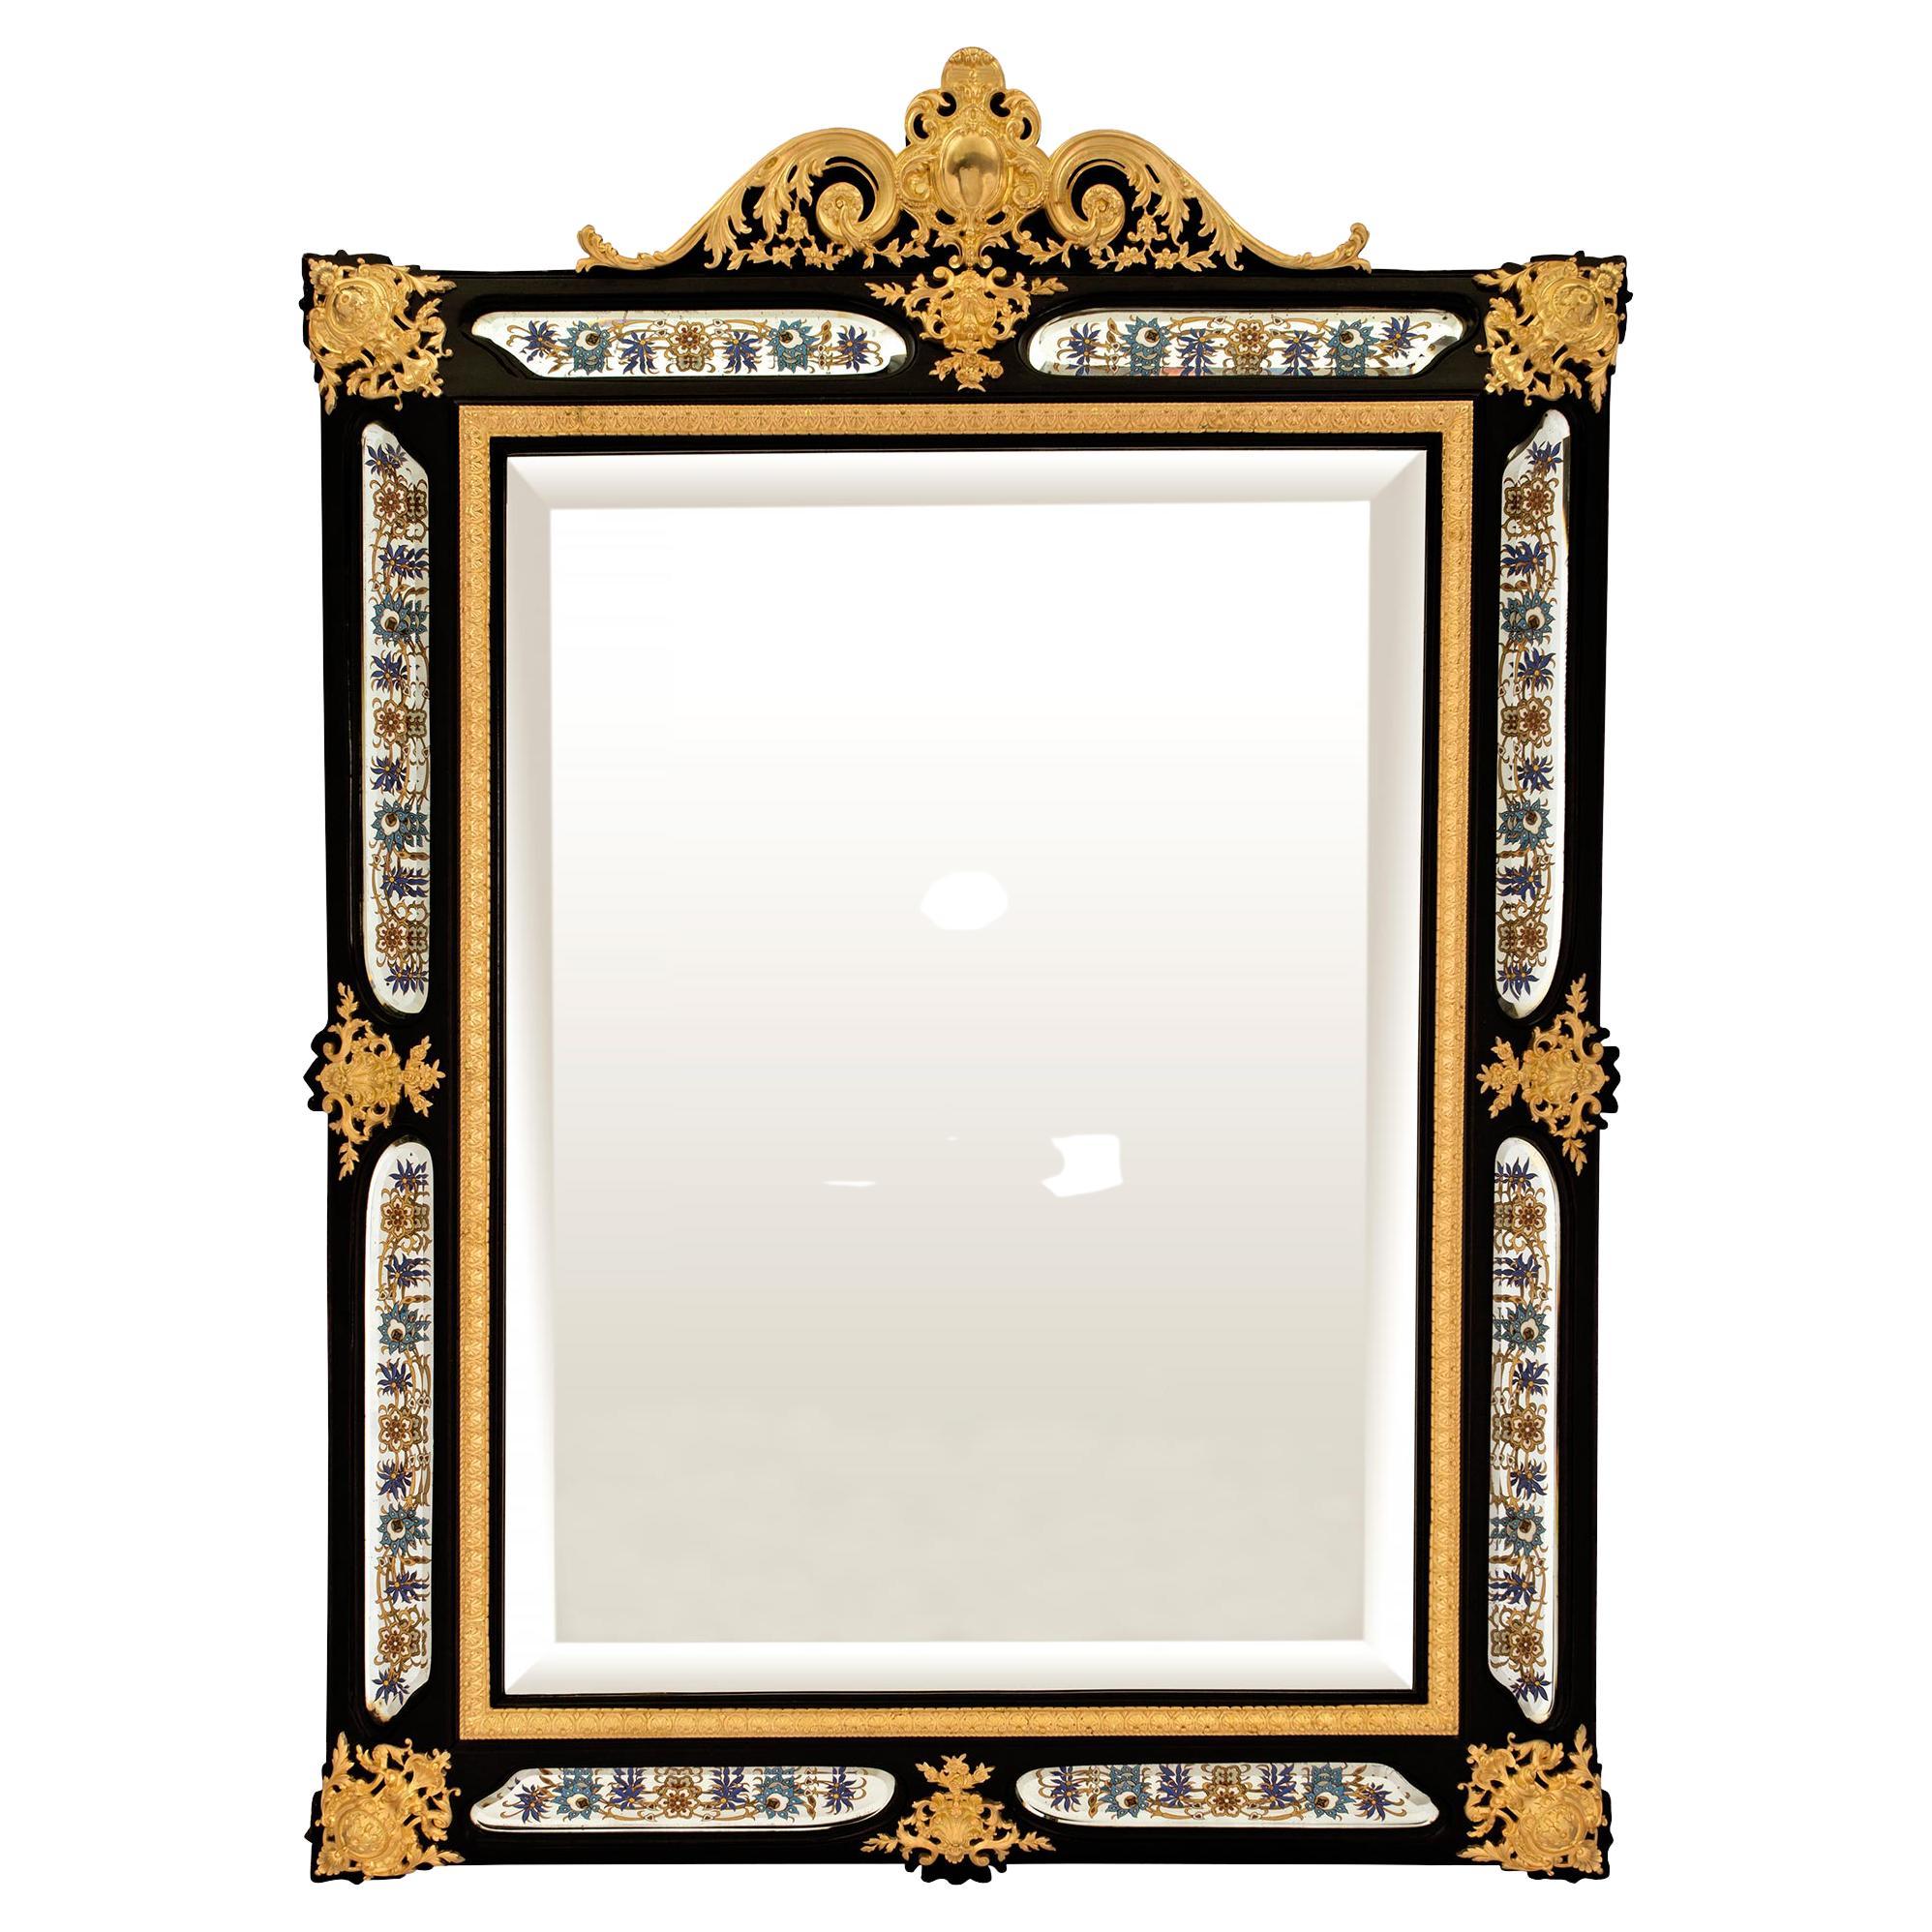 French Mid-19th Century Napoleon III Period Ebony and Ormolu Mirror